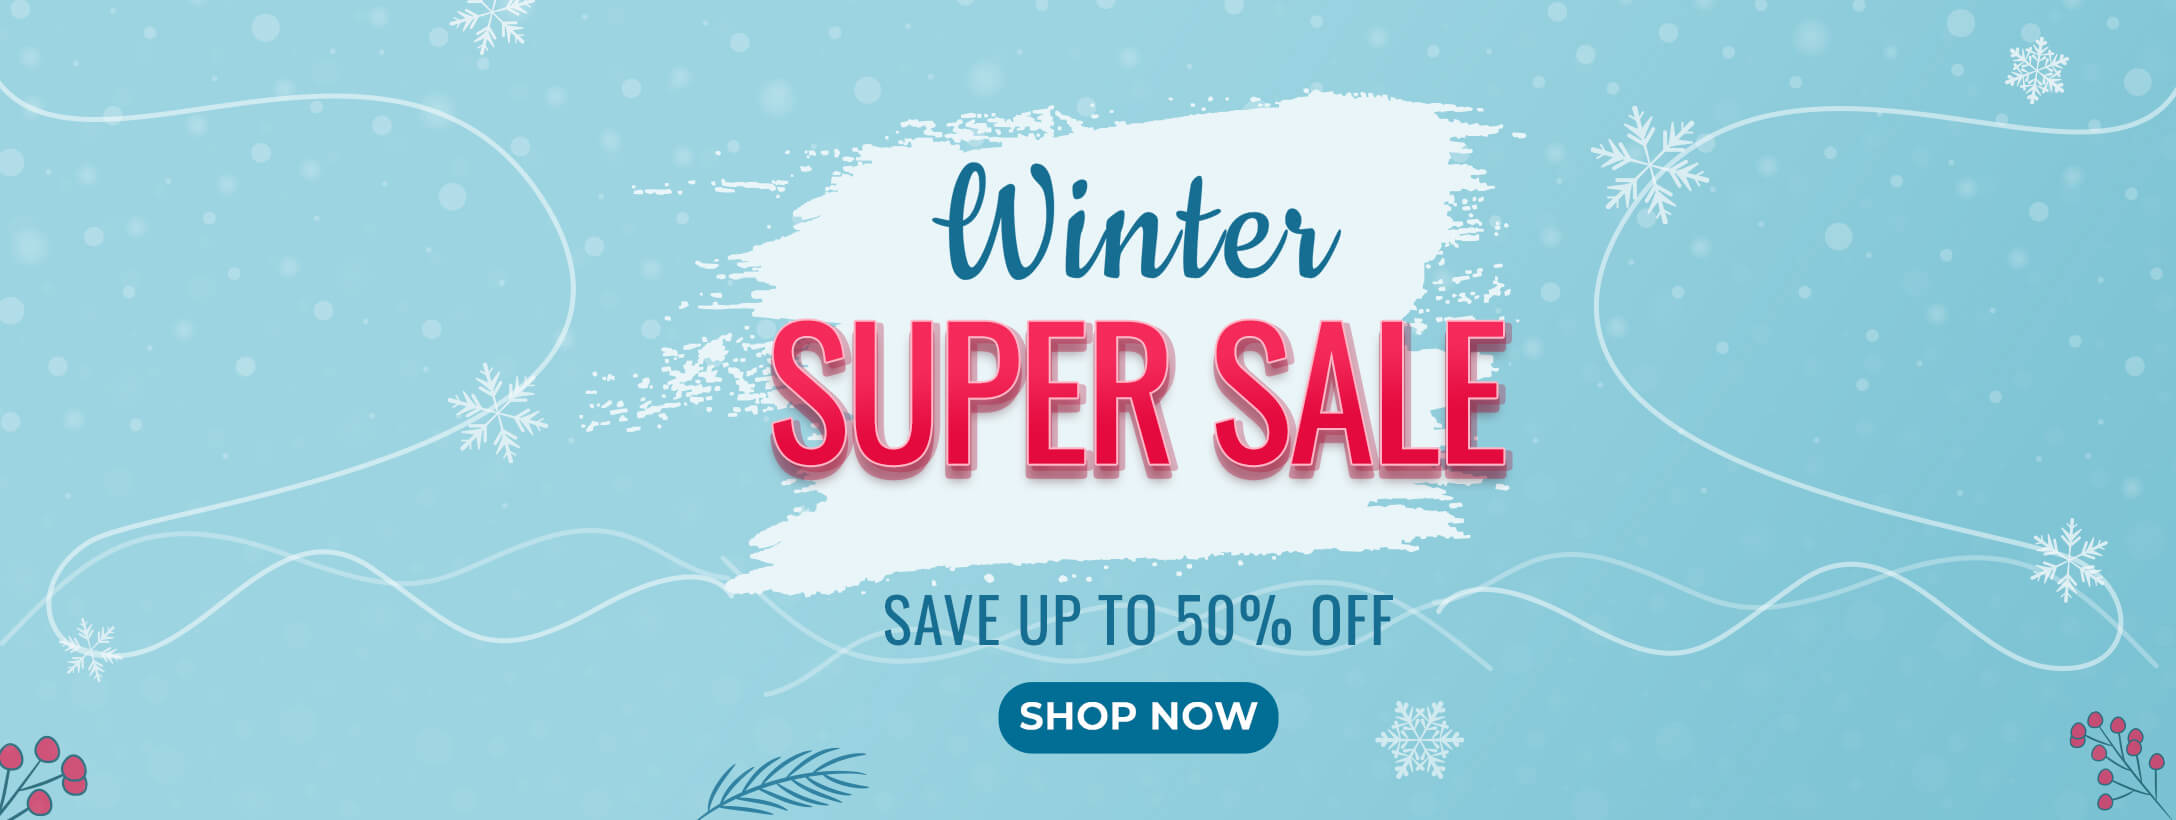 image-offer-winter-sale